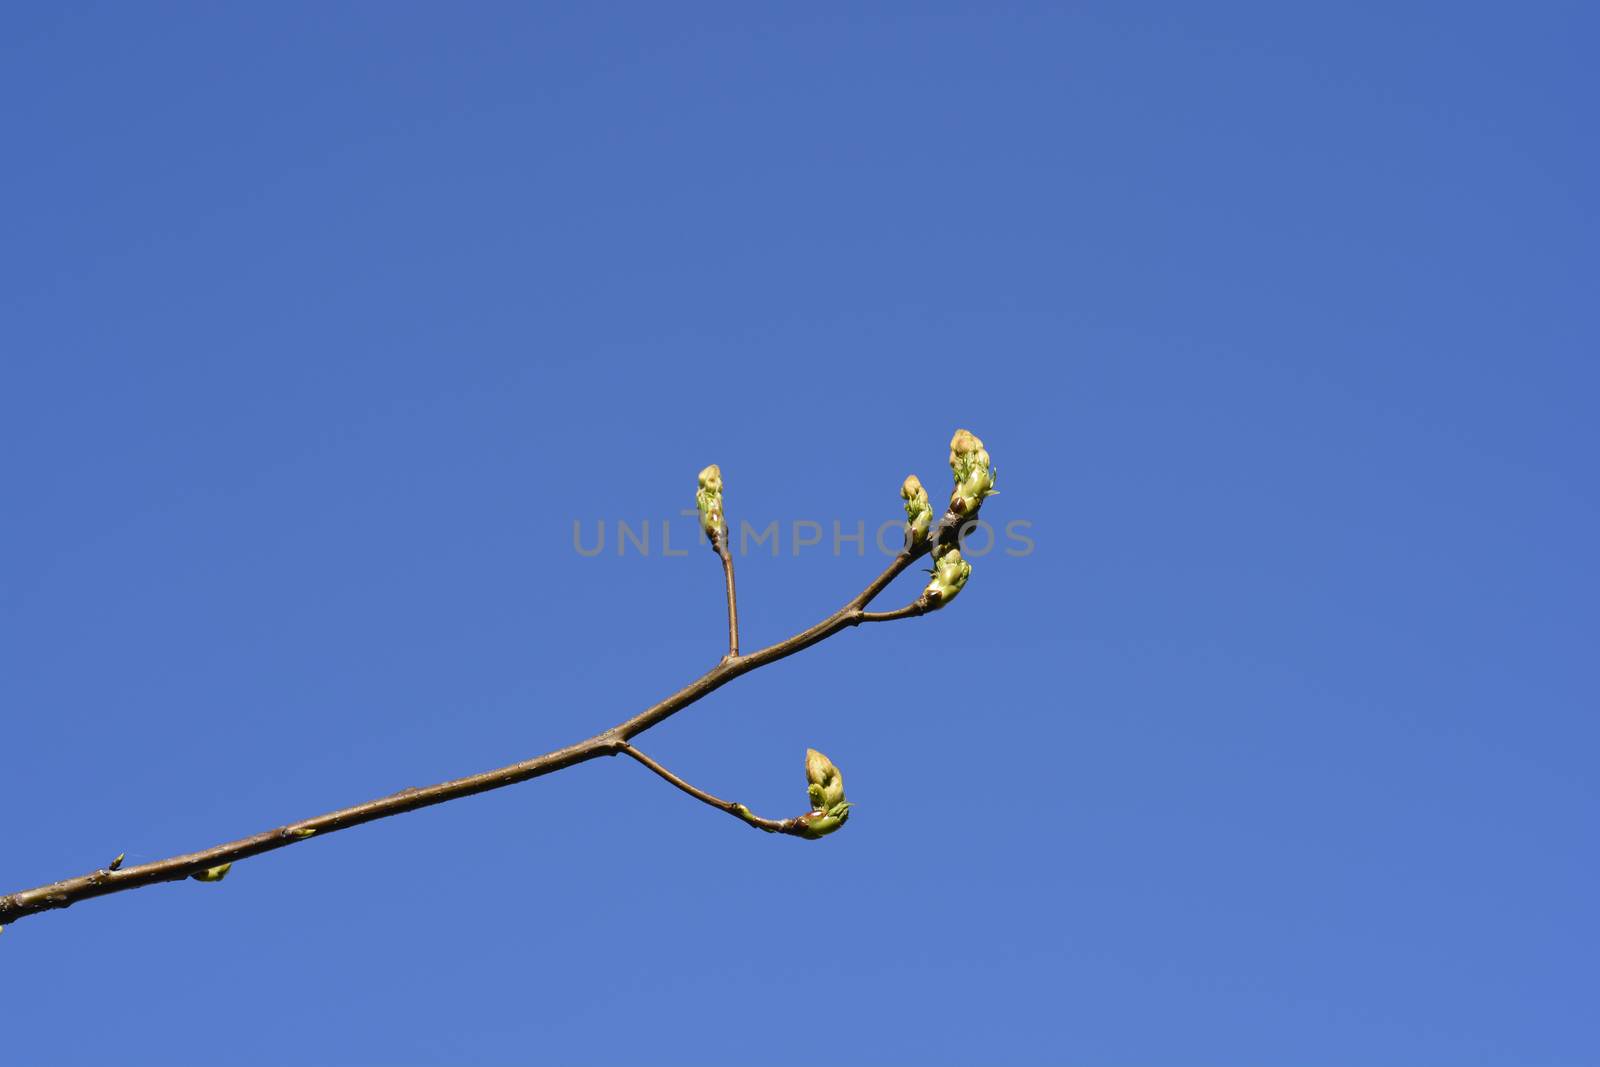 American sweetgum branch with new leaves against blue sky - Latin name - Liquidambar styraciflua